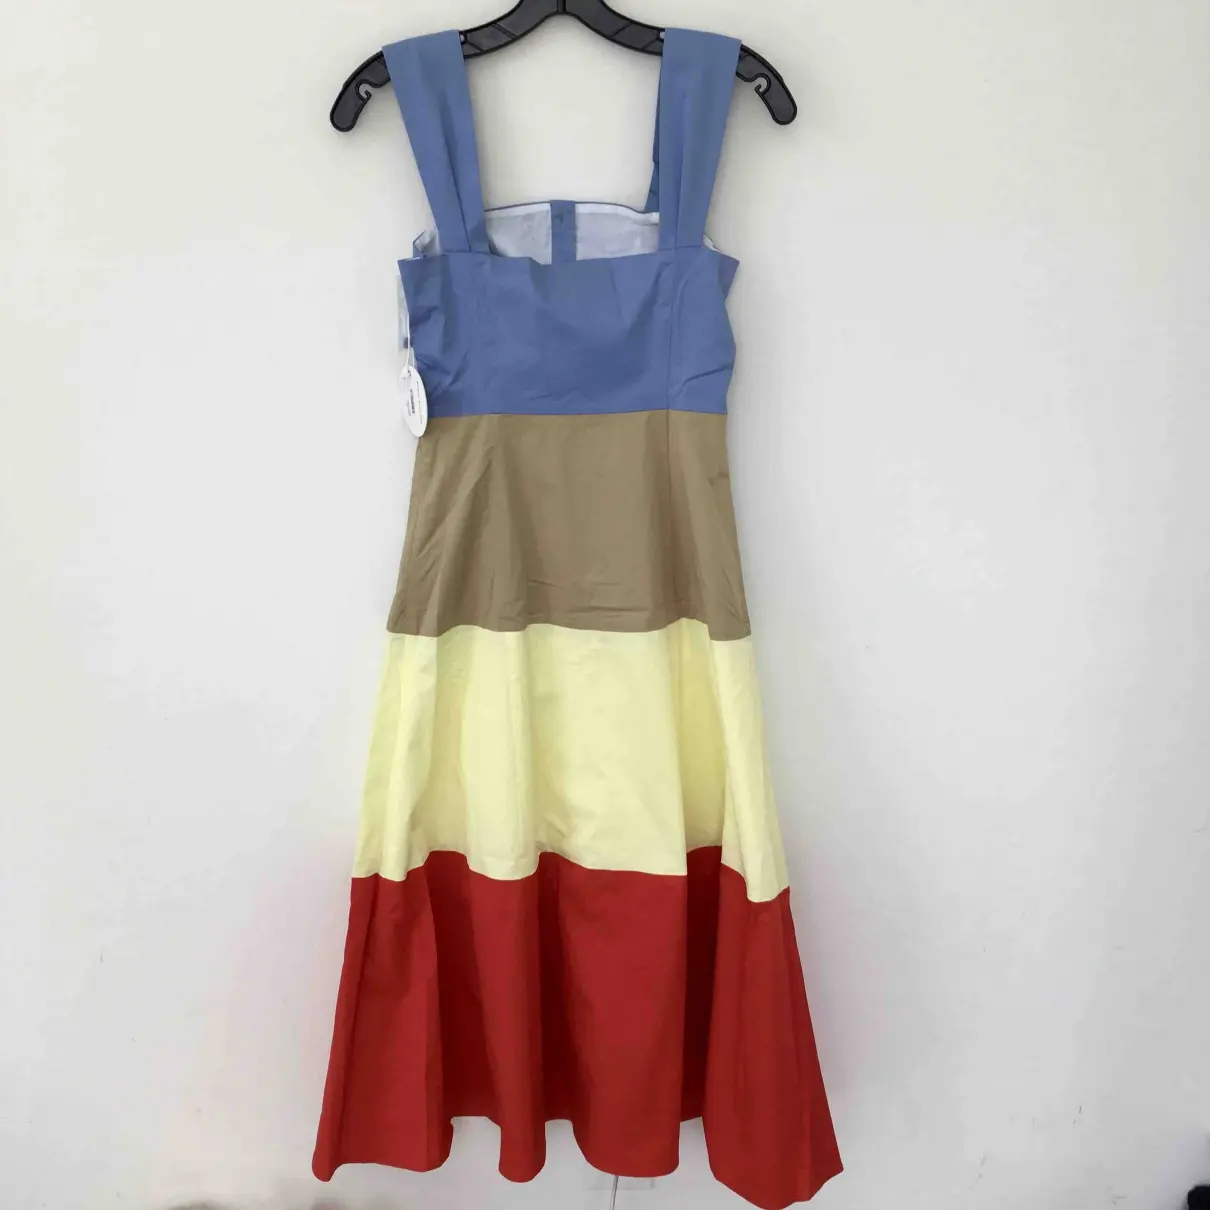 Buy Staud Mid-length dress online